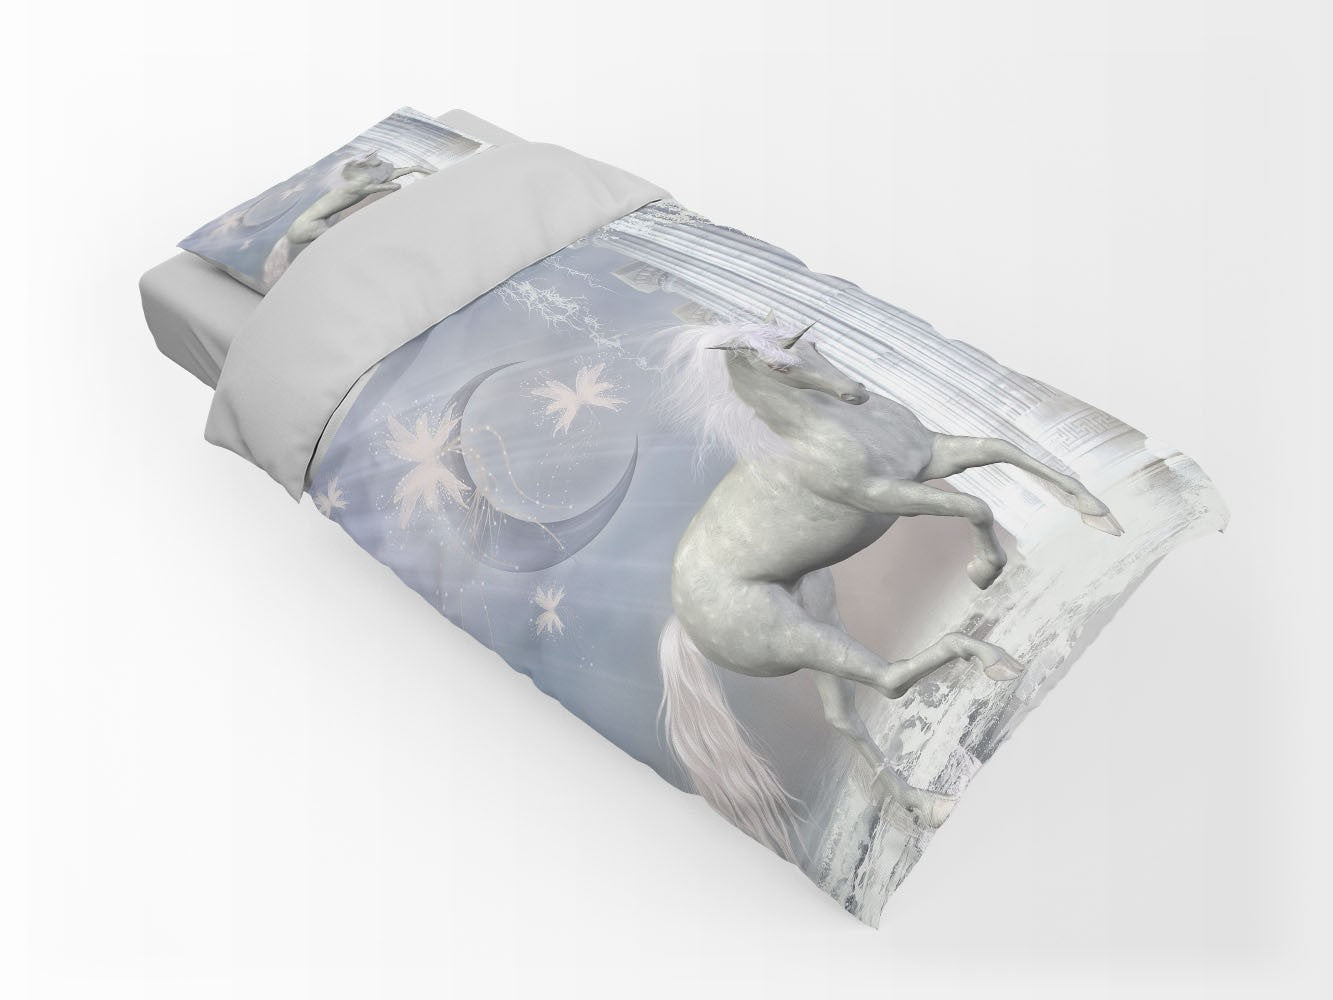 Unicorn Moon Kids Fantasy White 3D Duvet Cover Set W Pillow Cover, Single Double Queen King Size, Printed Cotton Quilt Doona Cover 3 Pcs